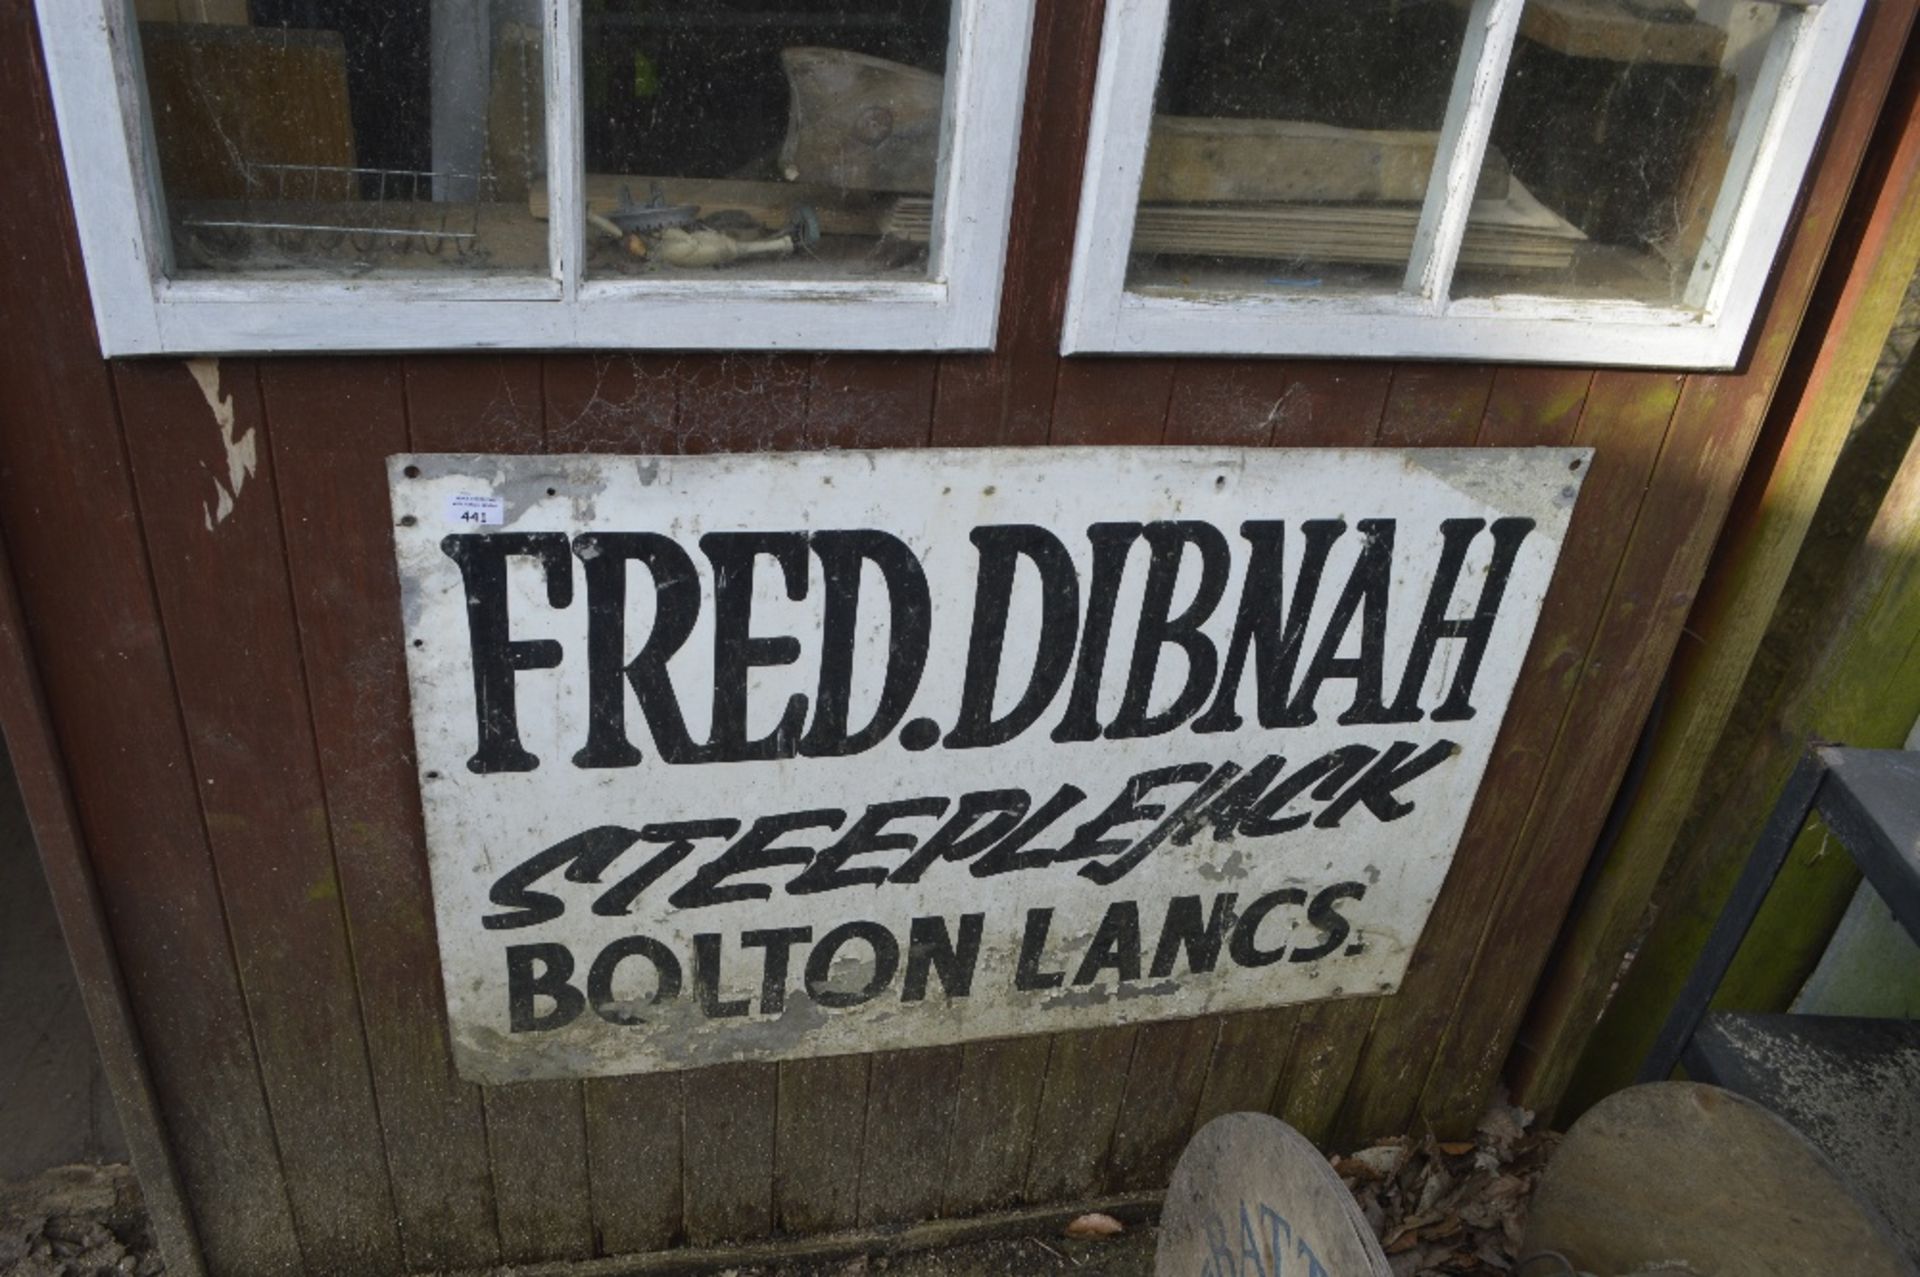 A sign inscribed 'Fred Dibnah Steeplejack Bolton Lancs', approx. 3ft x 2ft.